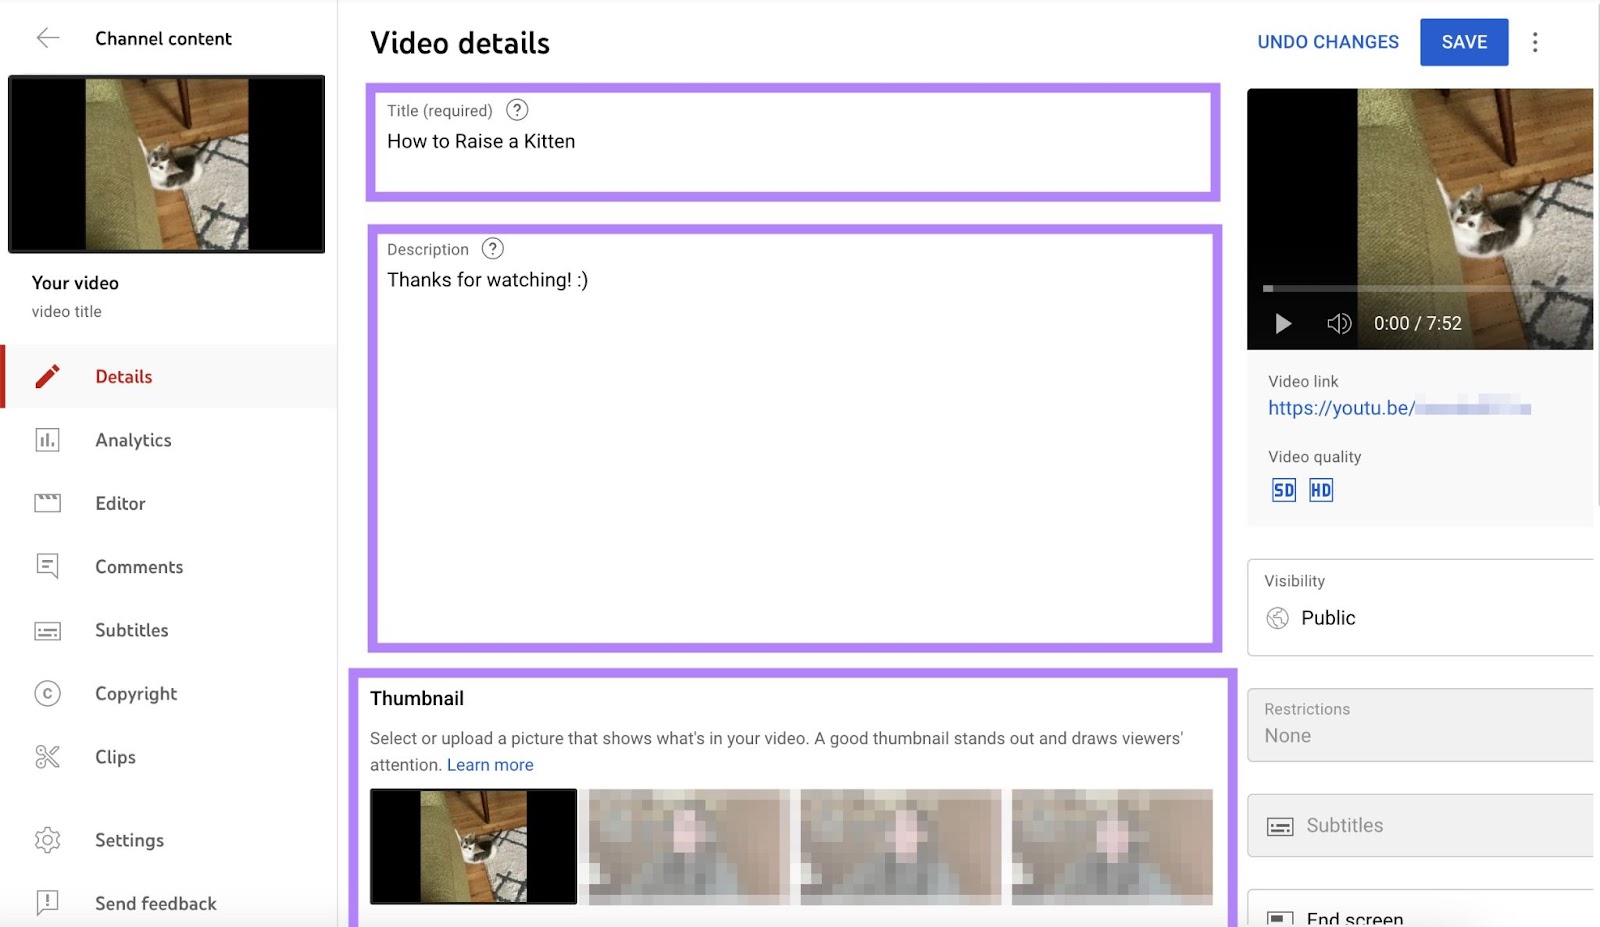 Add title, description, thumbnail and other details under "Video details" window